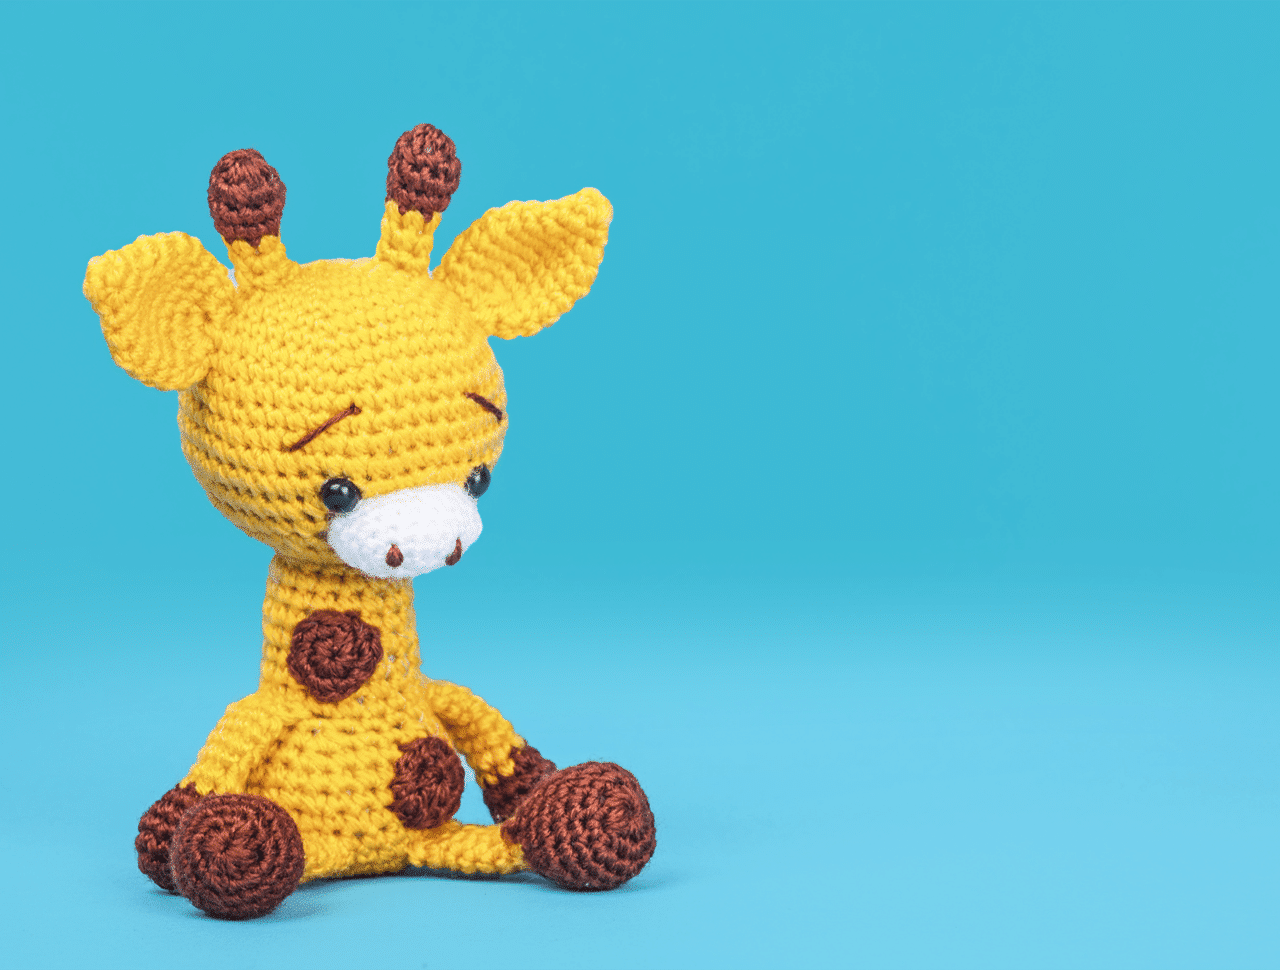 amigurumi giraffe 1 Amigurumi,Crochet animals,Knitting or Crochet,Crochet animals